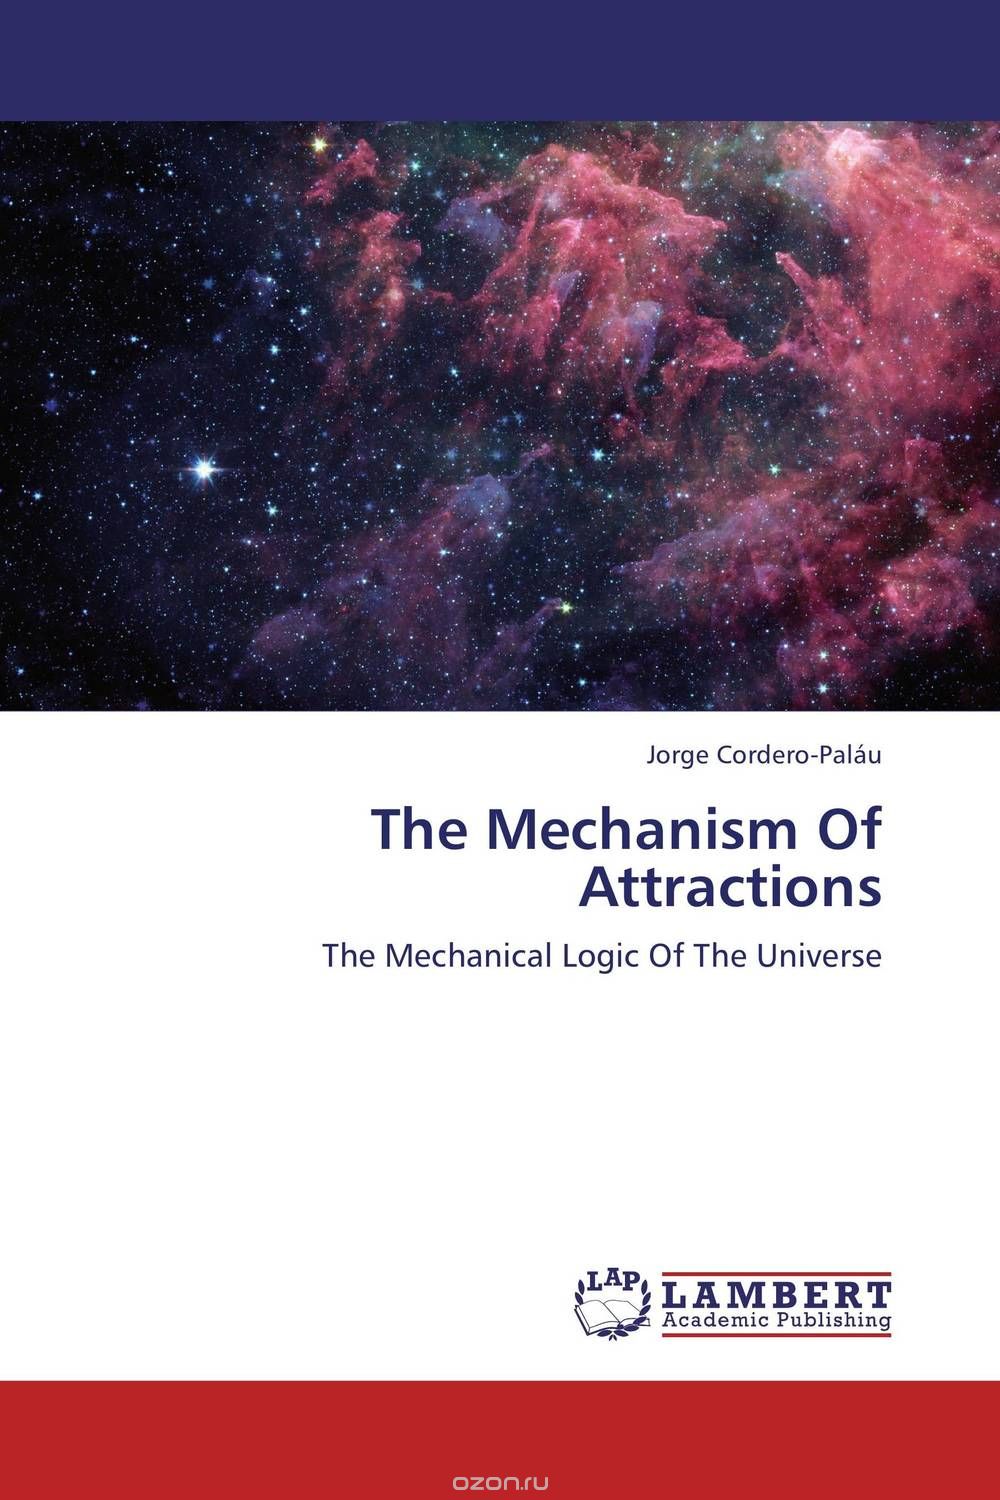 Скачать книгу "The Mechanism Of Attractions"